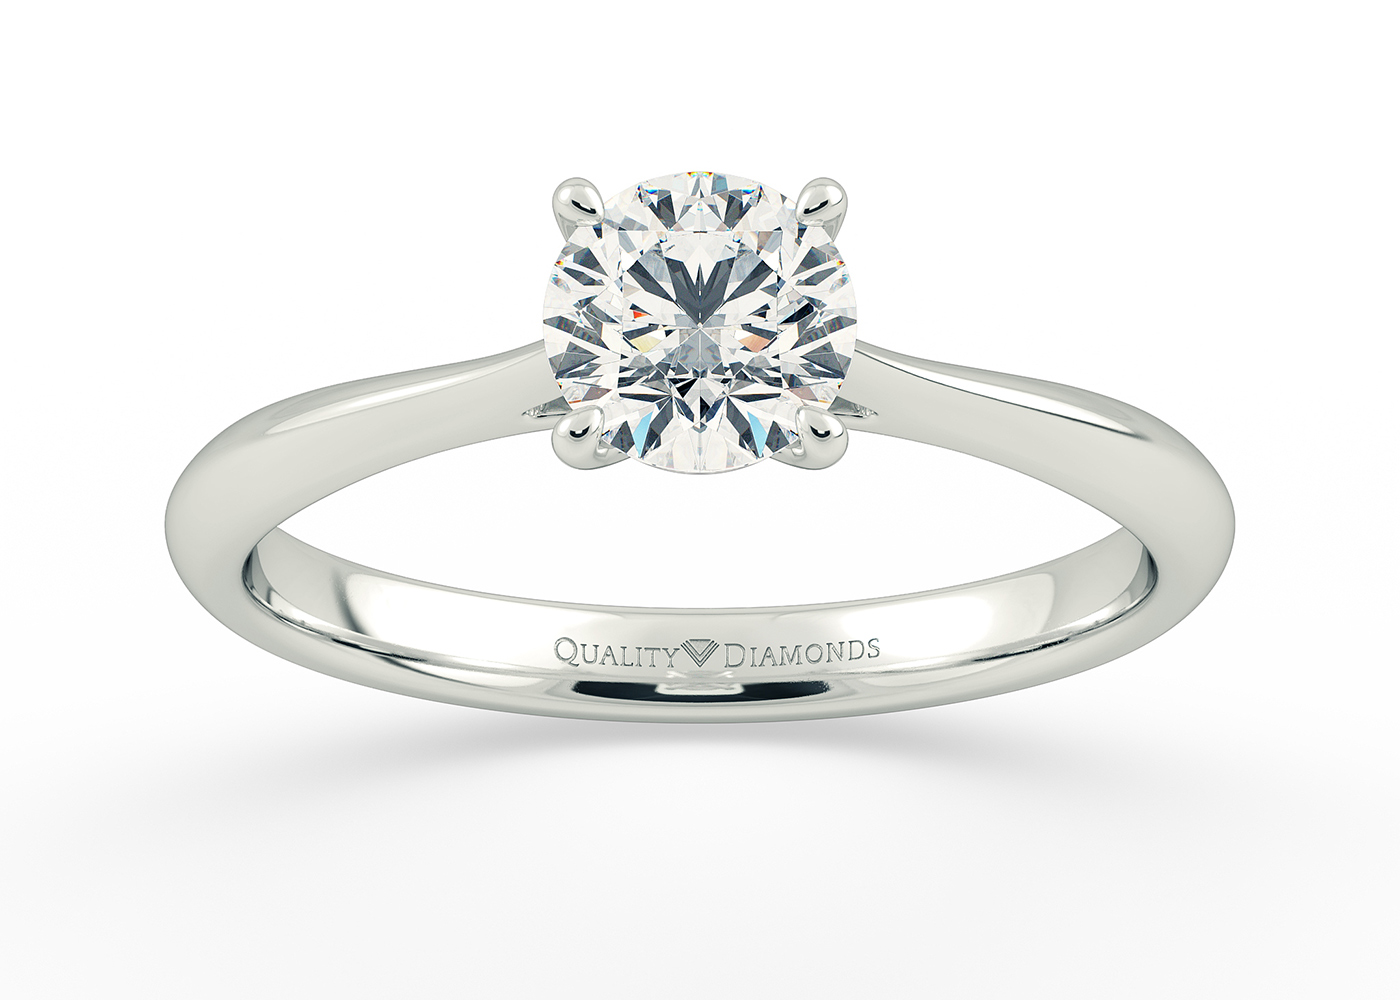 Low Cost Luxury 14K 1.00Ct Diamond Ring 52113 - Mr. Goldman & Sons